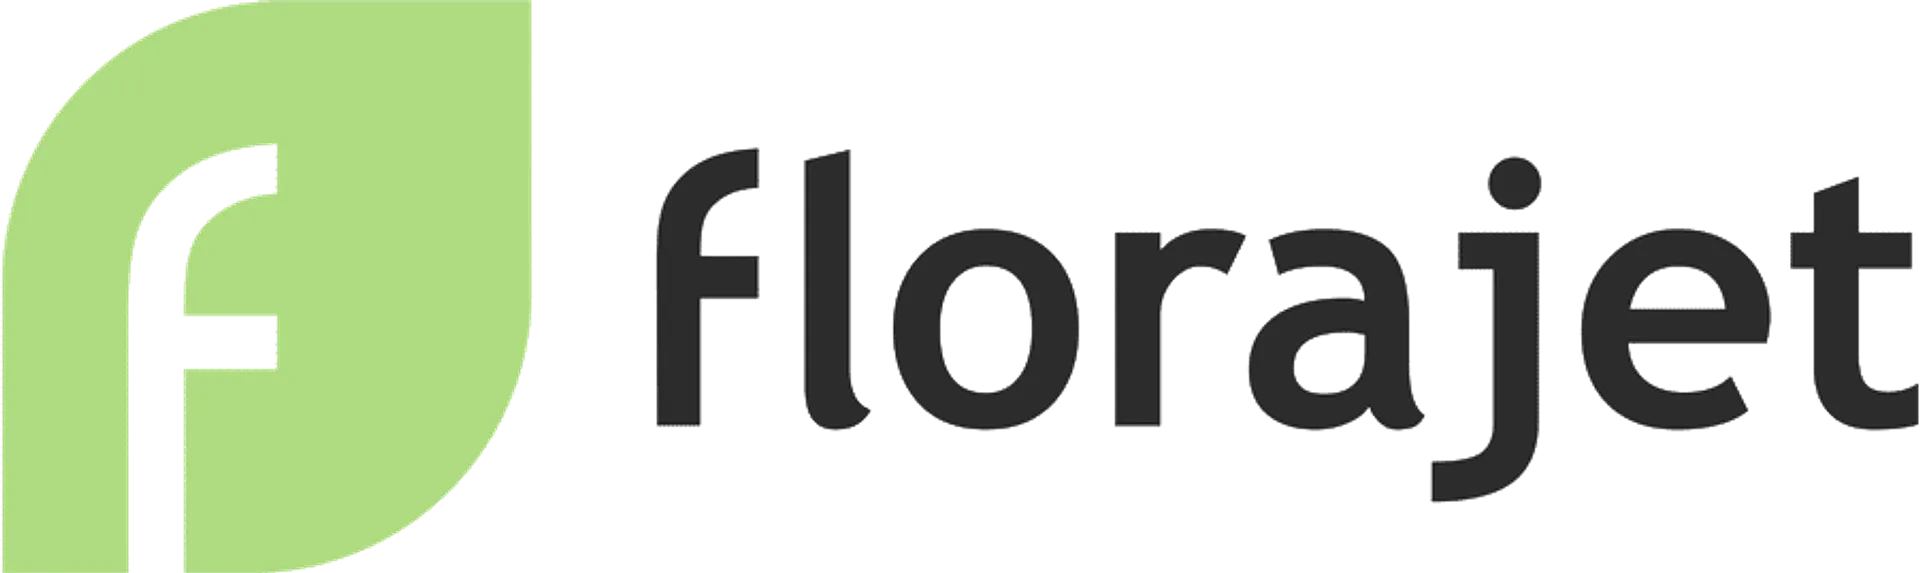 FLORAJET logo